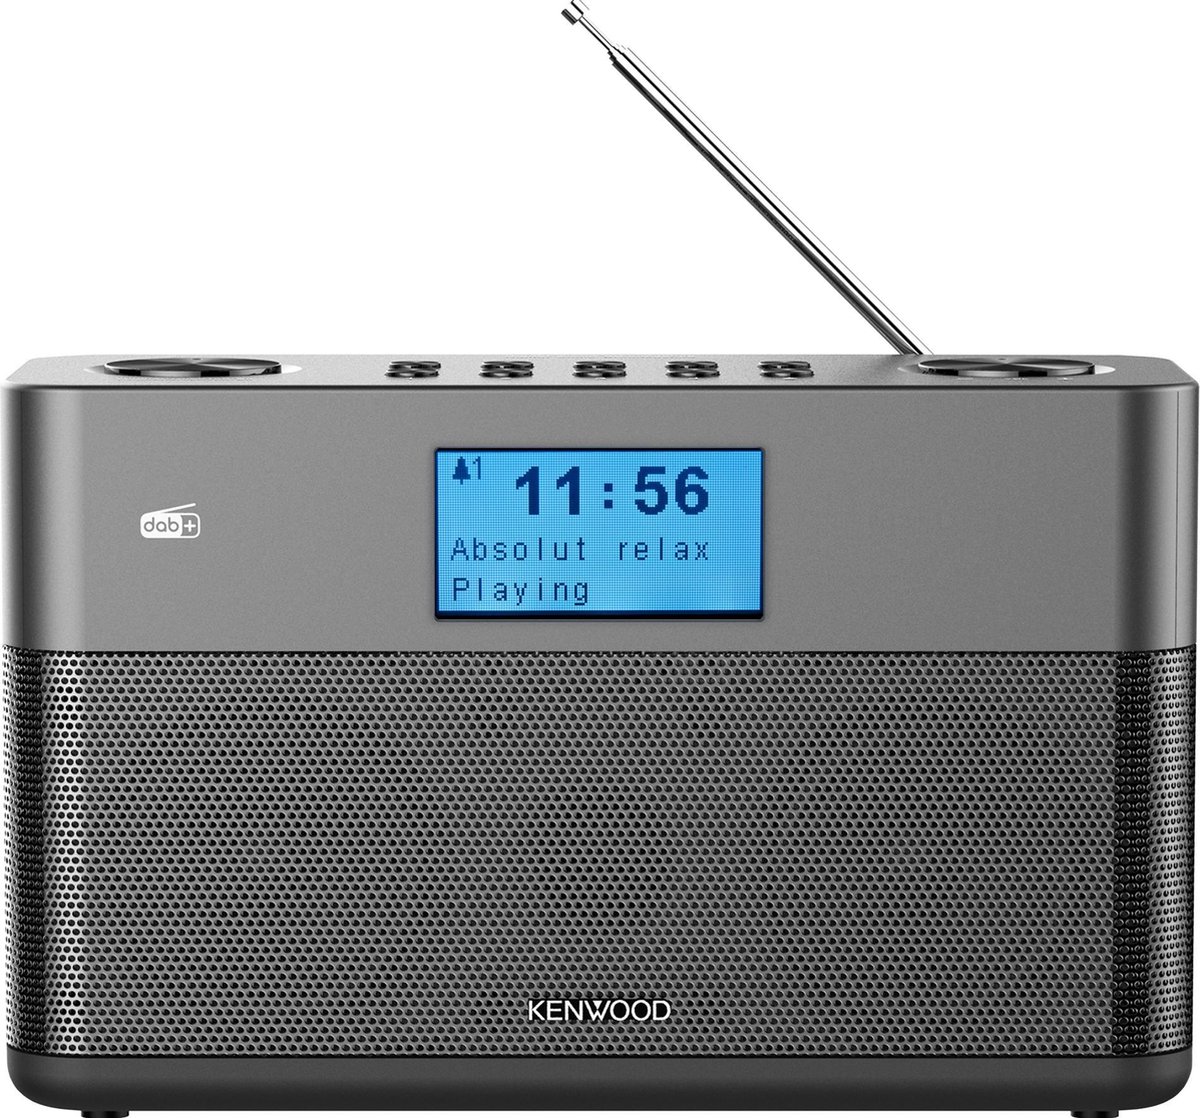 Afbeelding van product Kenwood Audio  Kenwood CR-ST50-DAB - Compacte Stereo DAB+ Radio - Antraciet CRST50DABH DAB/FM Compact Stereo Radio met Bluetooth Streaming